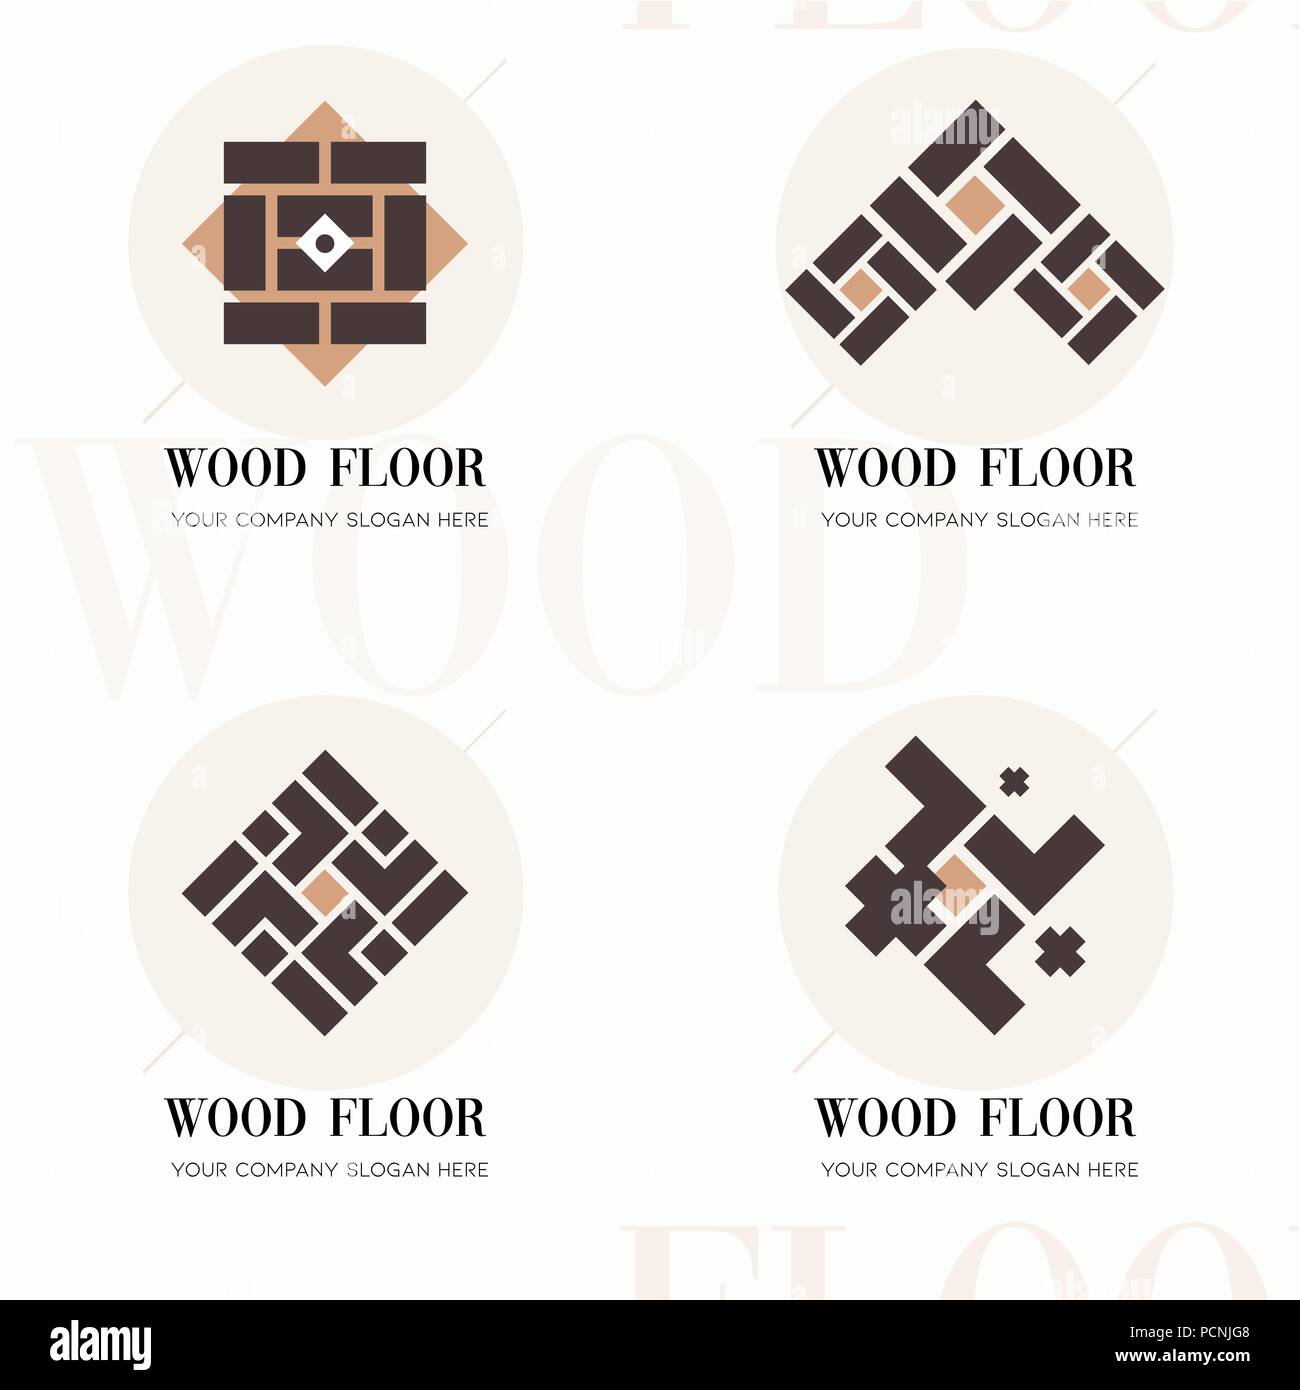 Wood Flooring Company Logos Wood Flooring Company Logos In Flat